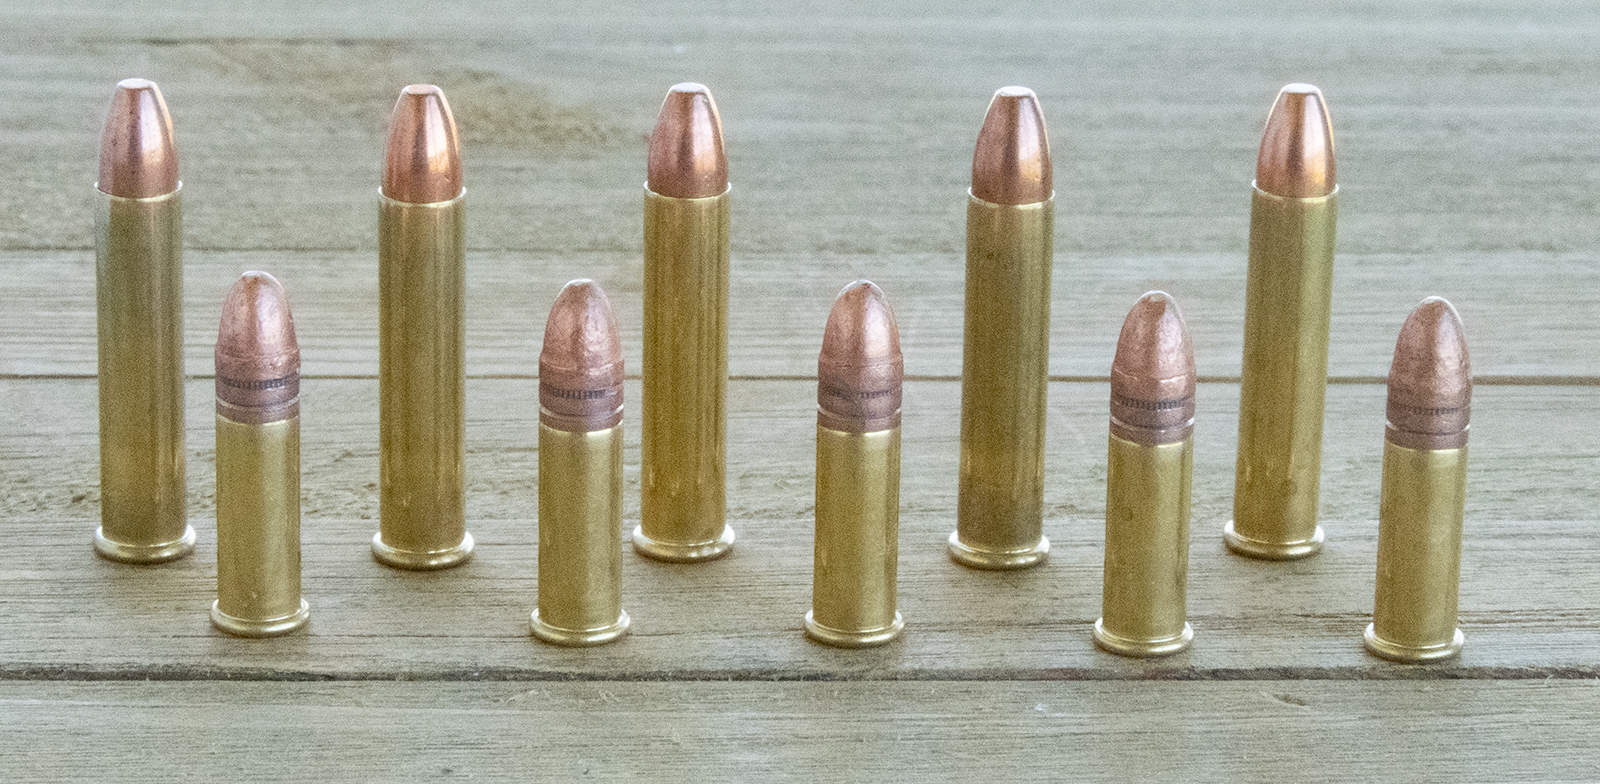 22 Magnum Bullet Vs 22 Lr.